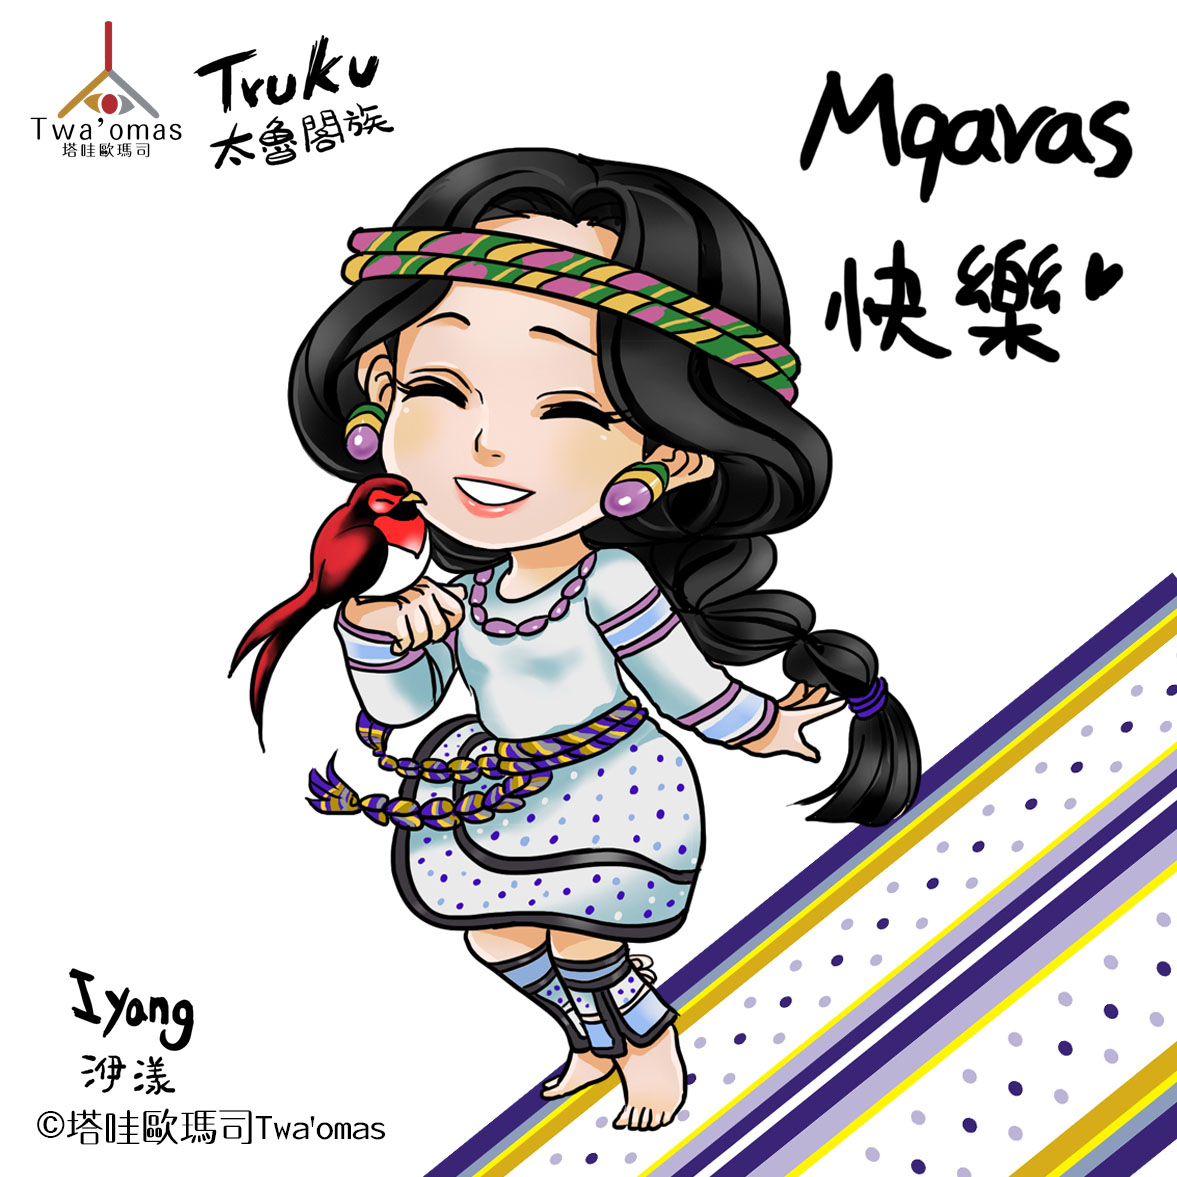 twaomas塔哇歐瑪司-日常-12-太魯閣族 Truku-快樂Mqaras.jpg